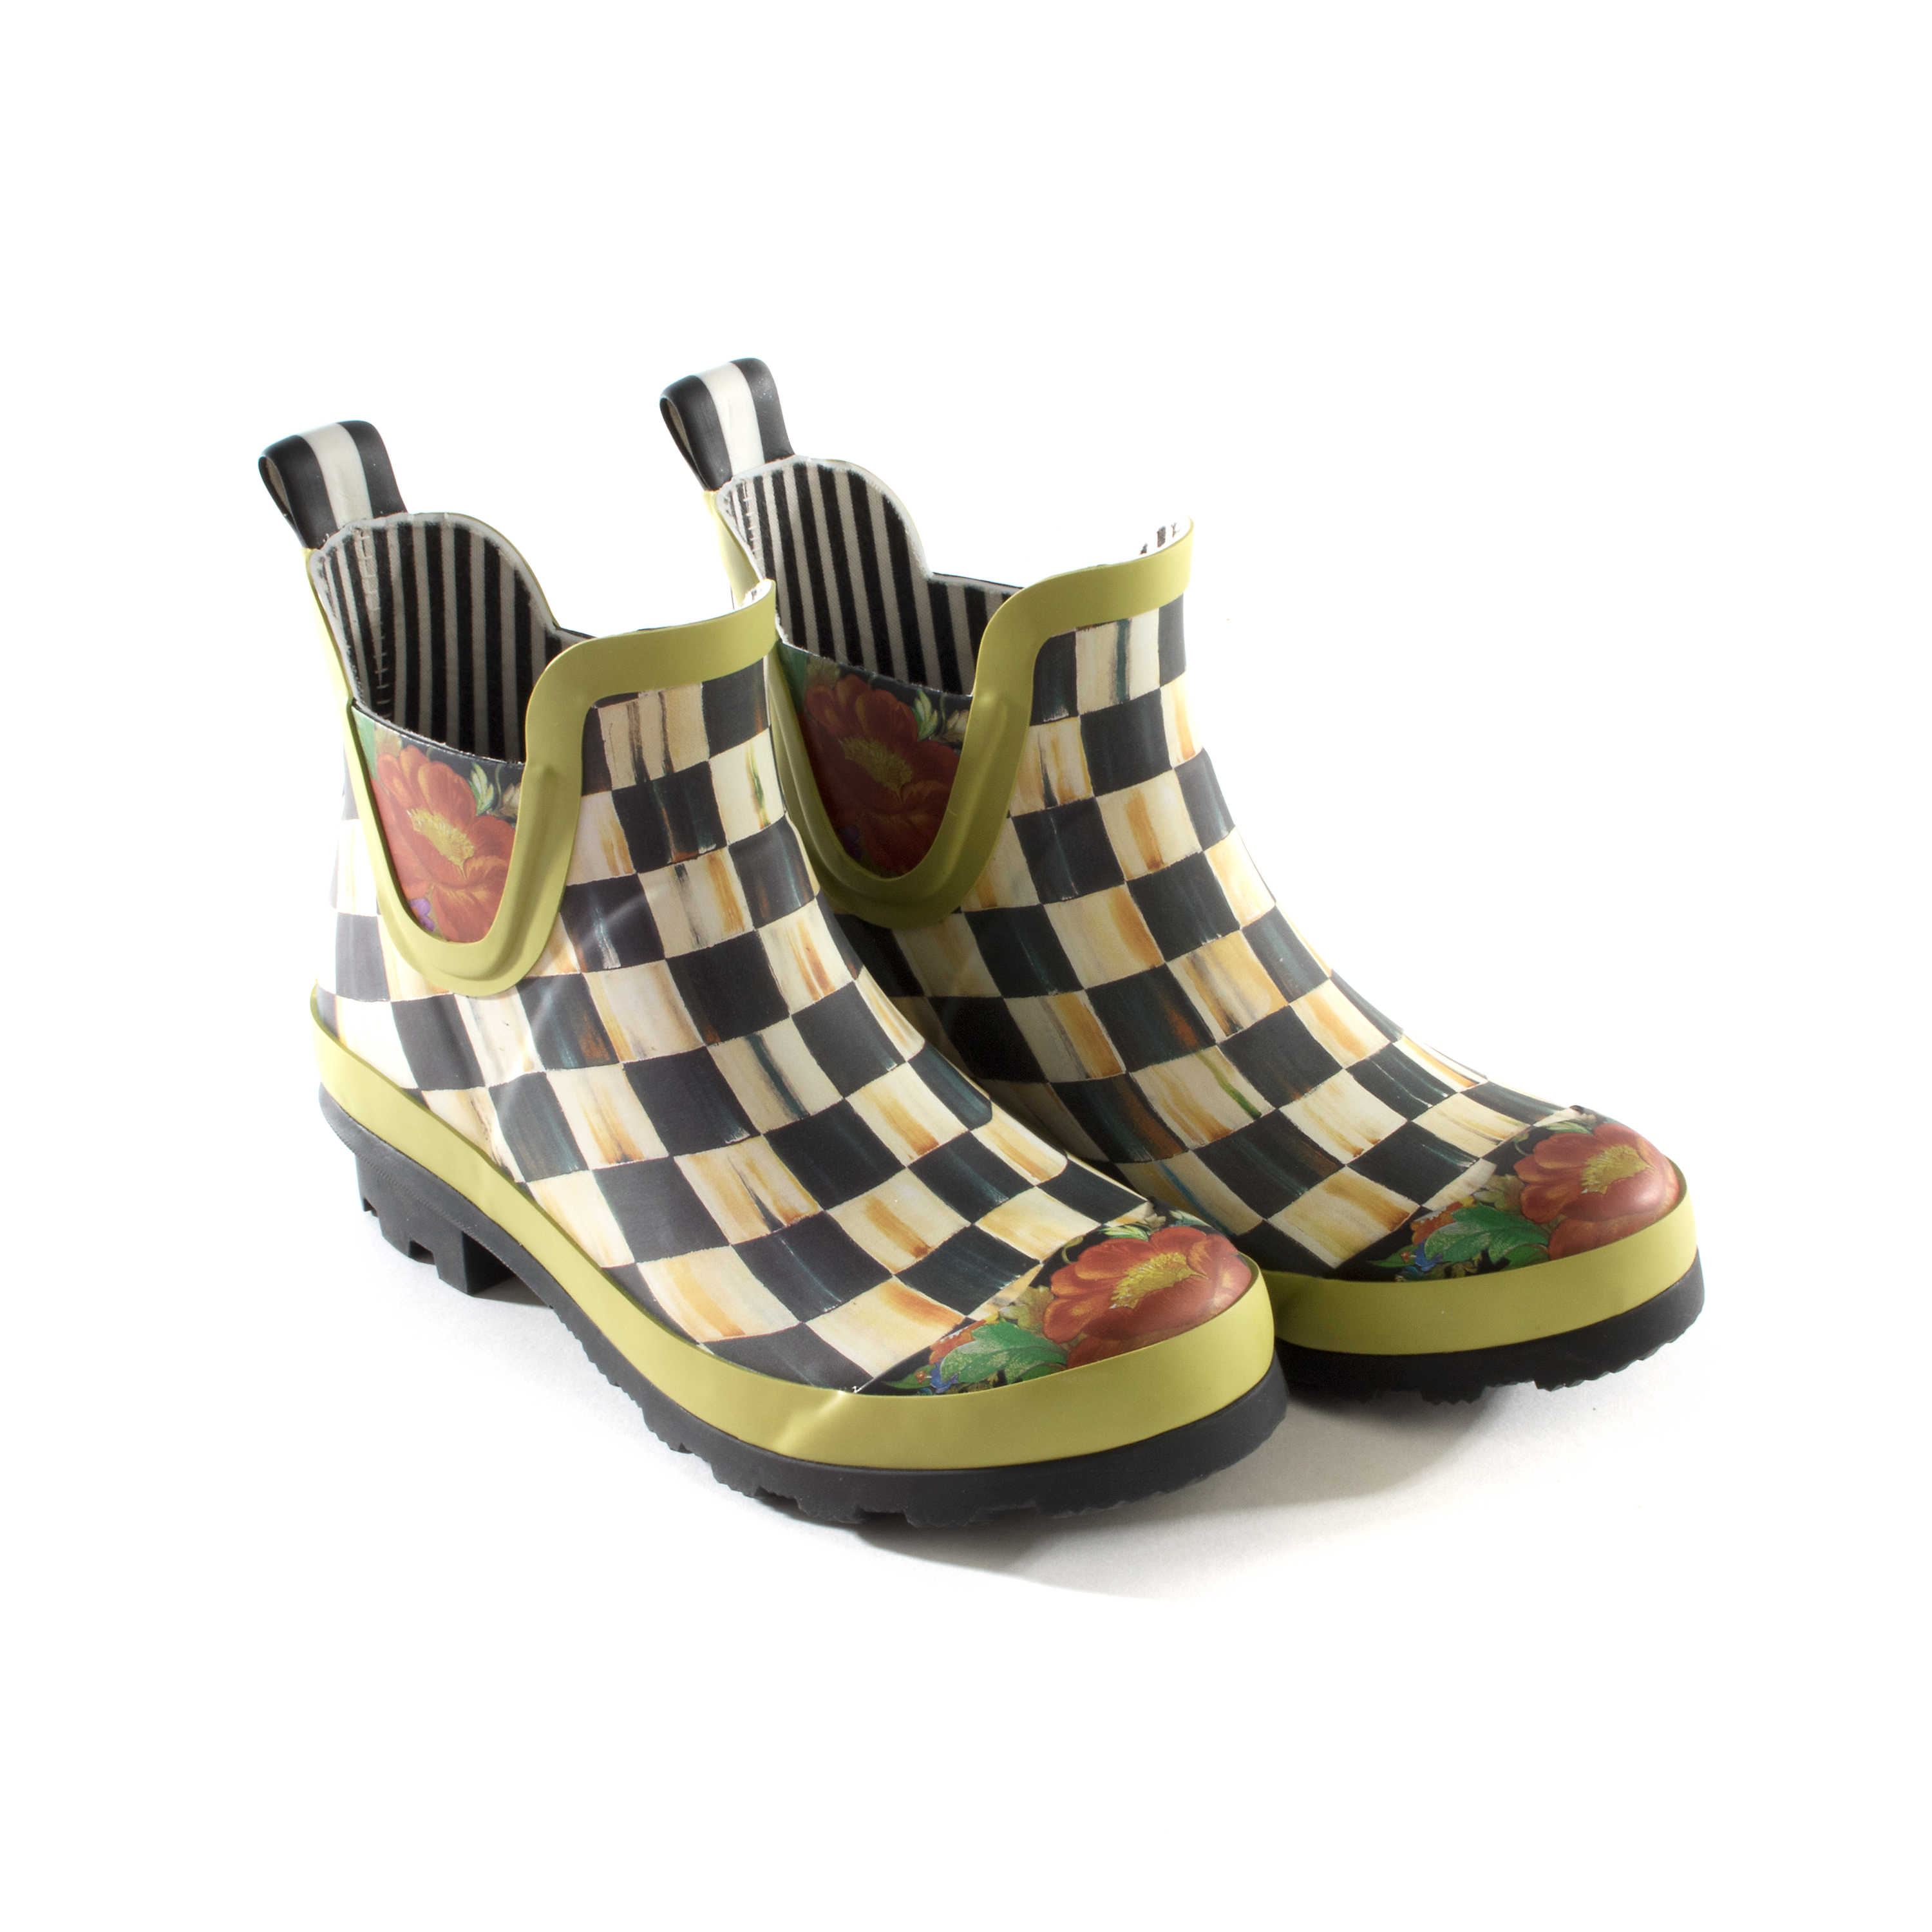 Courtly Check Rain Boots - Short - Size 7 mackenzie-childs Panama 0